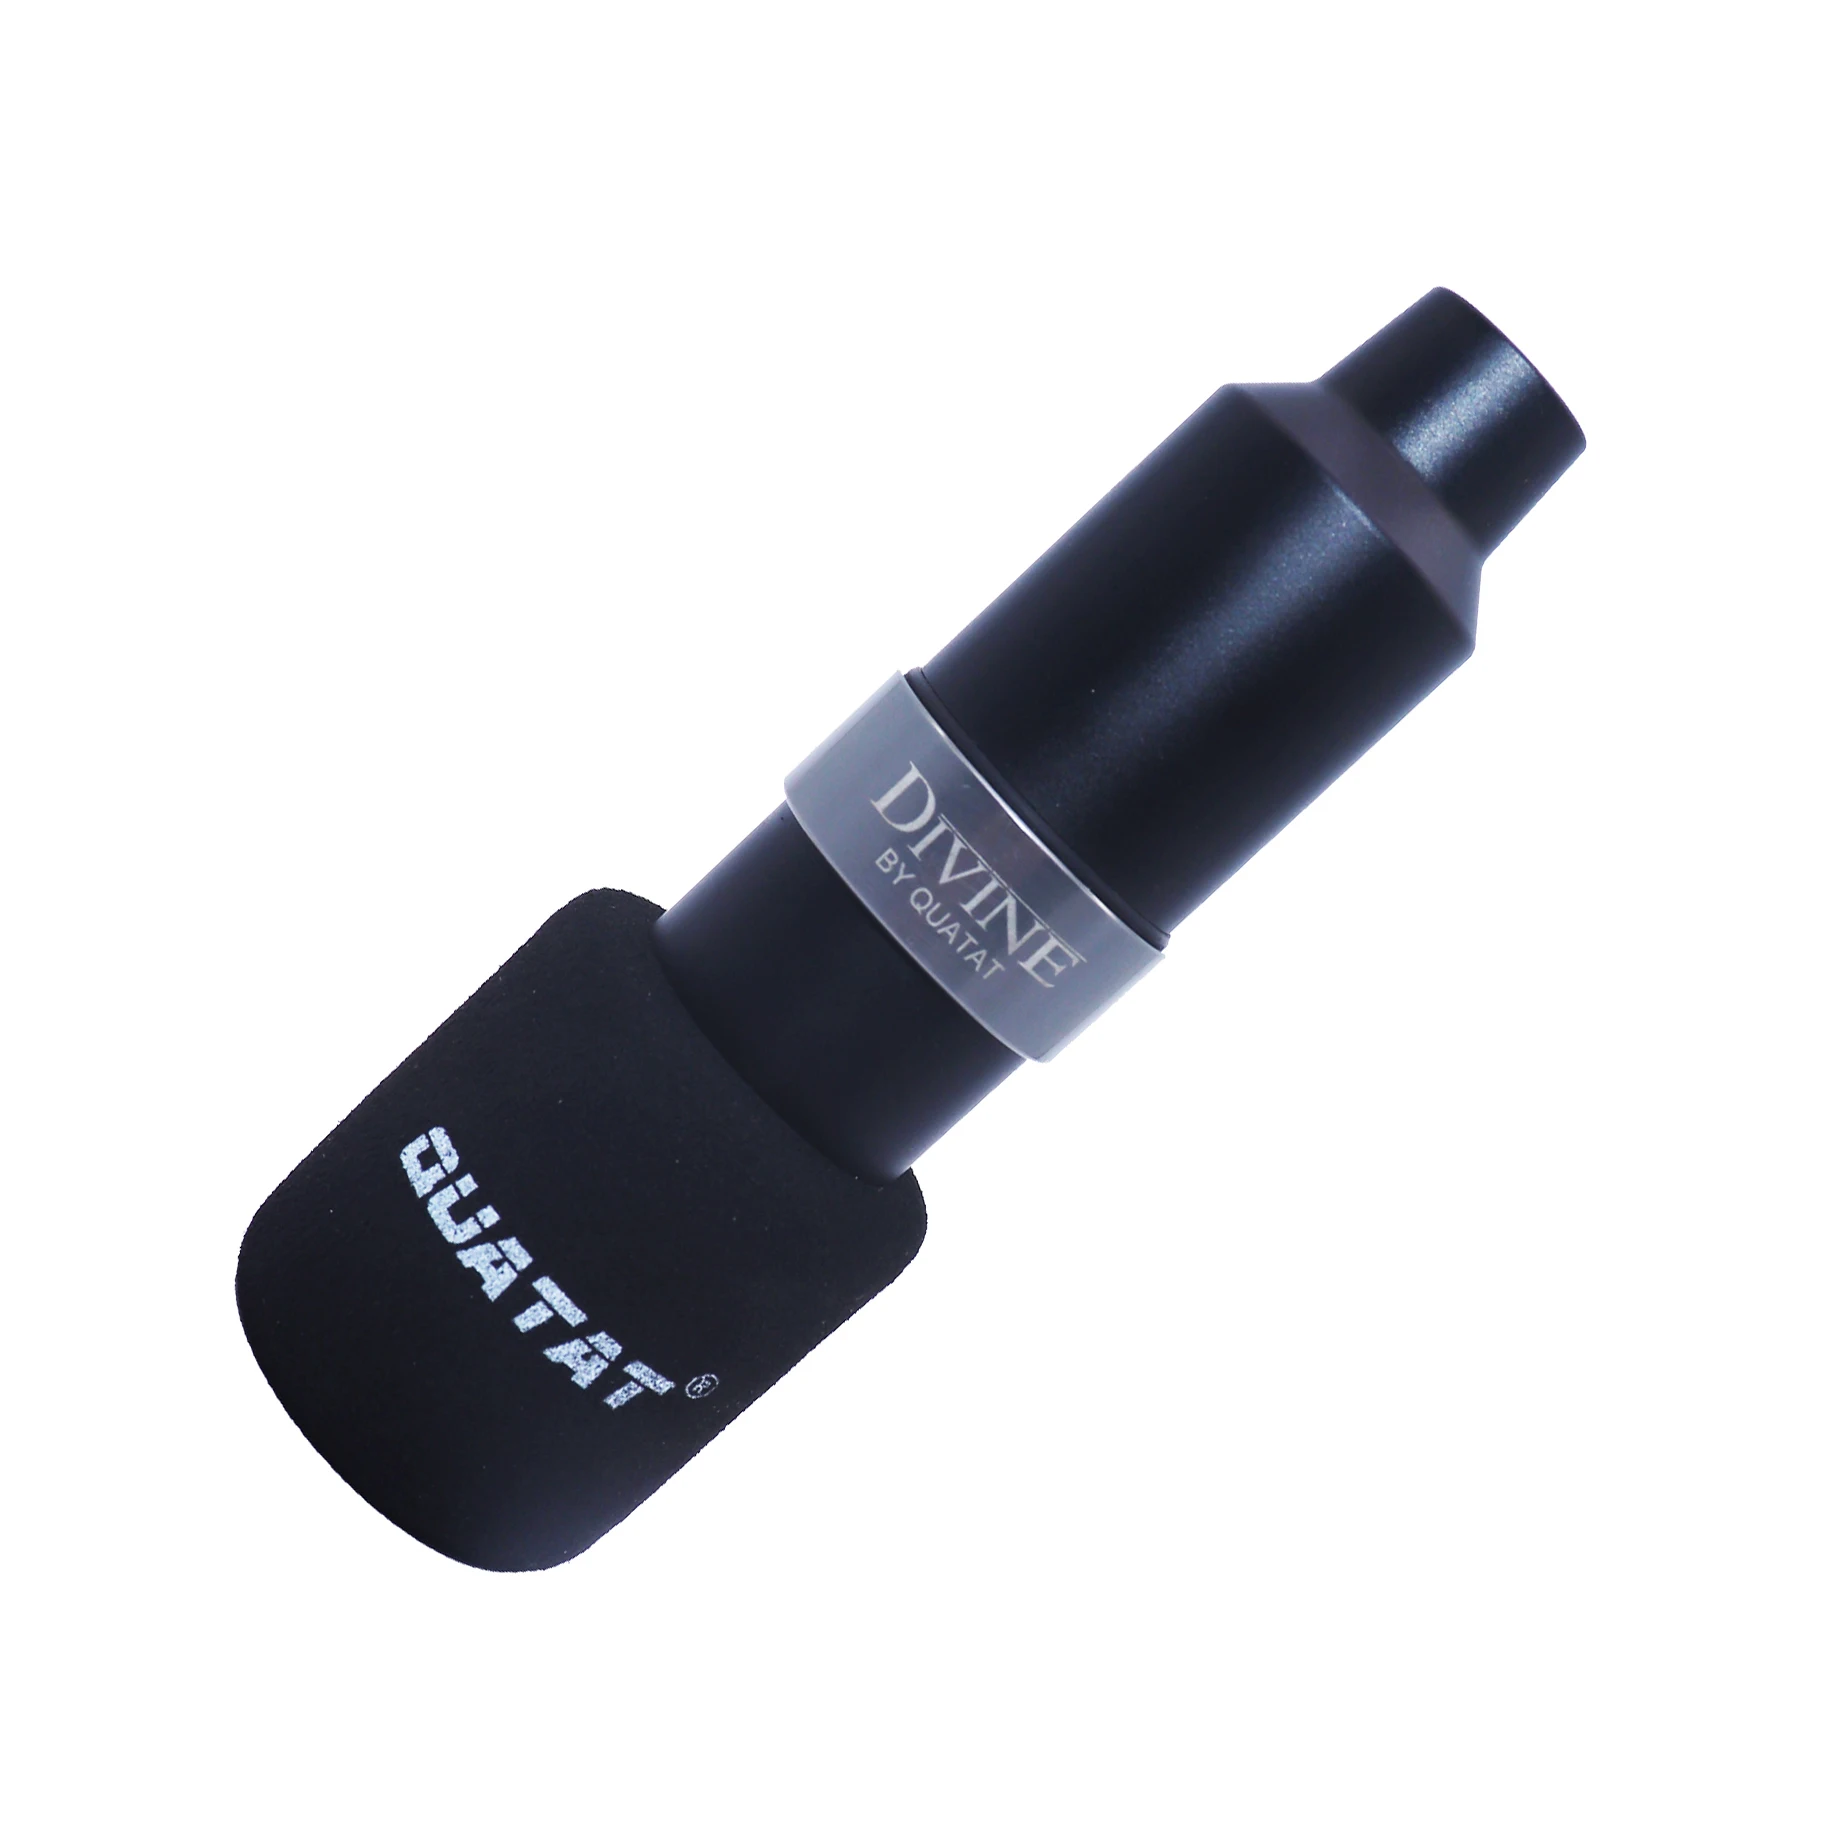 
QUATAT 35mm Foam Grip With Steel grip Tattoo Cartridge Pen Machine Individual Package Tattoo Grip 